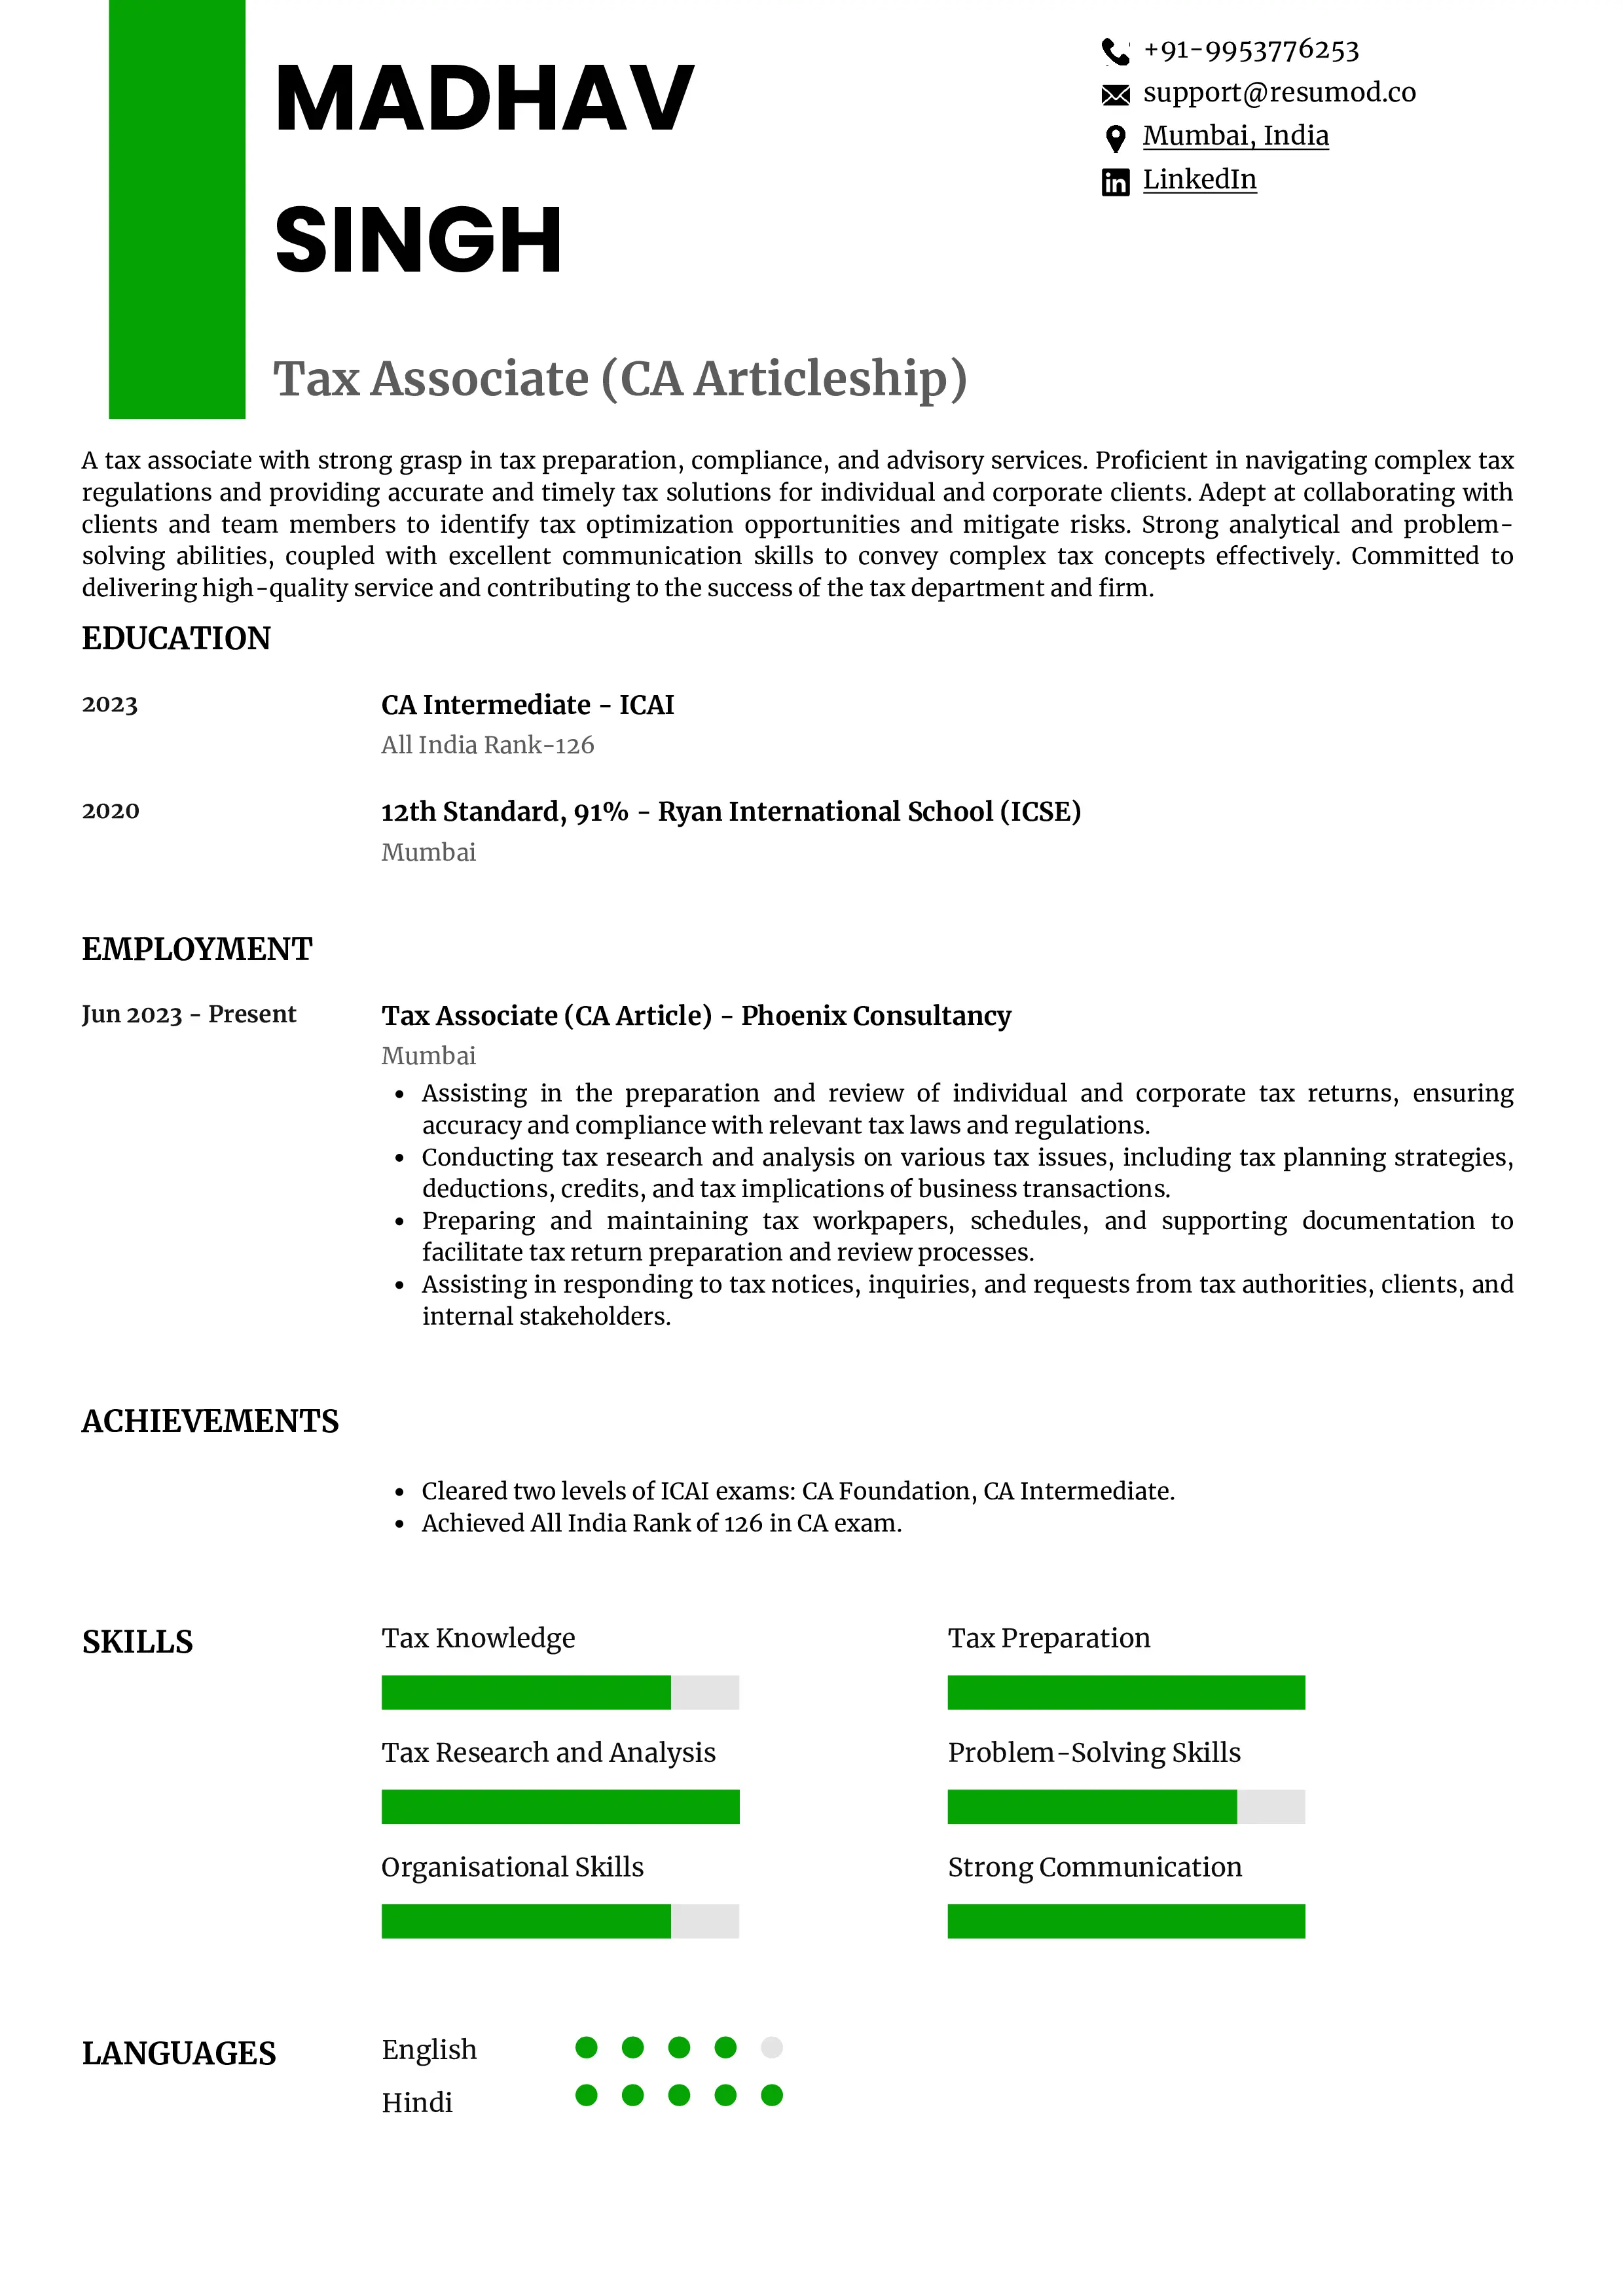 Sample Resume of Tax Associate | Free Resume Templates & Samples on Resumod.co